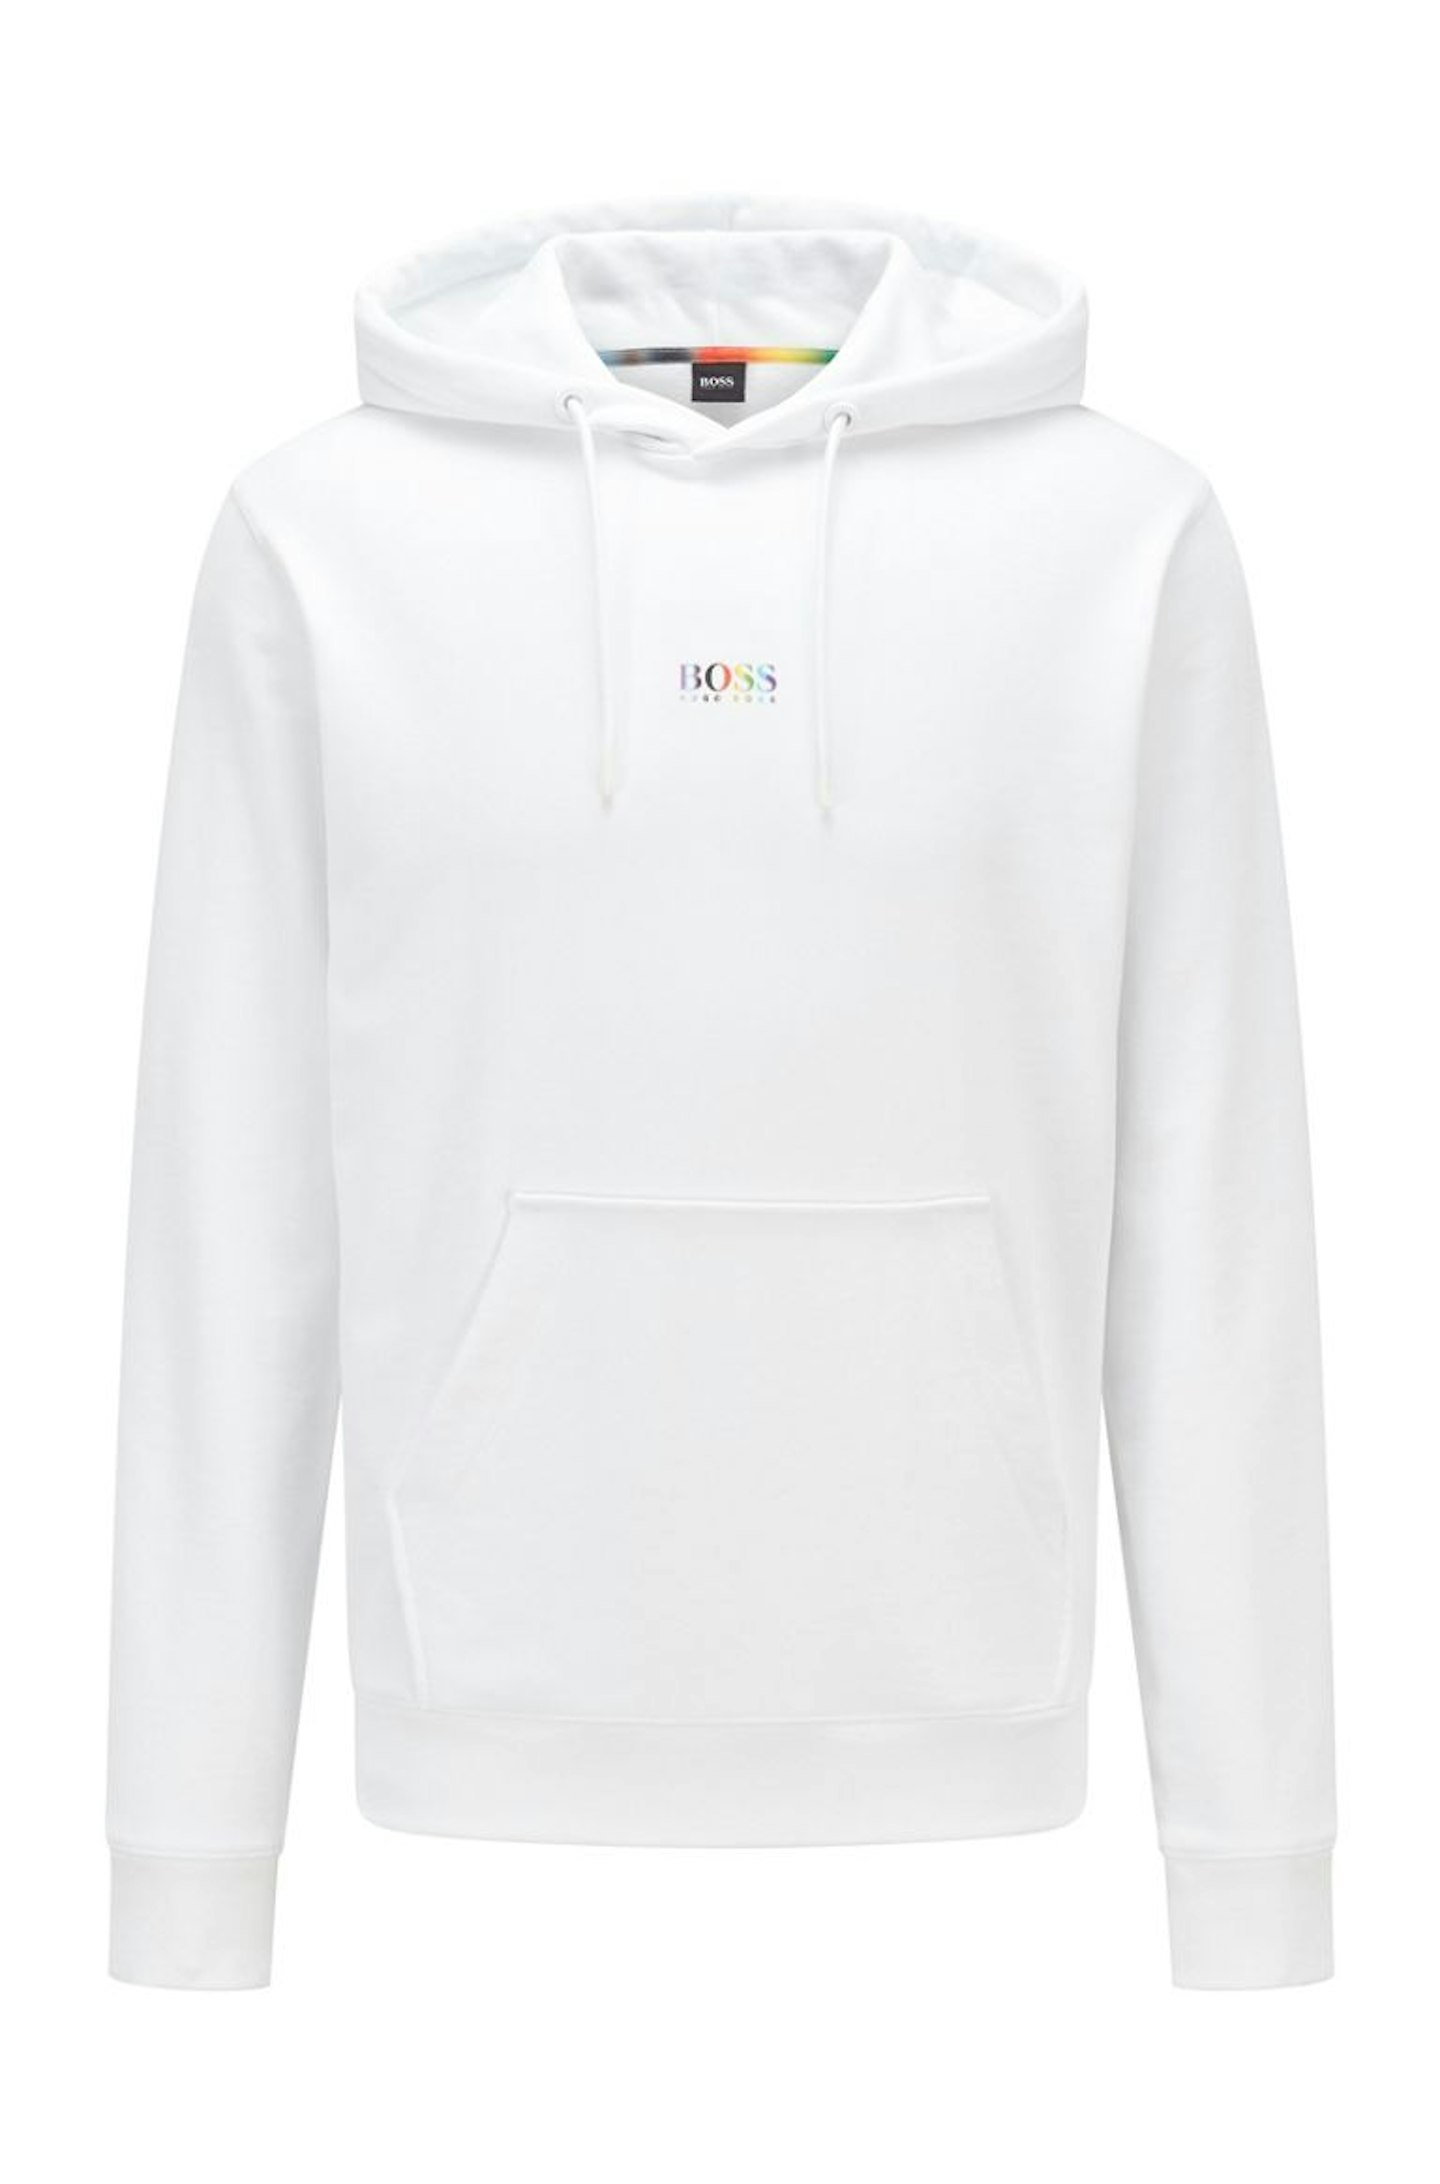 BOSS, Rainbow-logo hoodie, £149